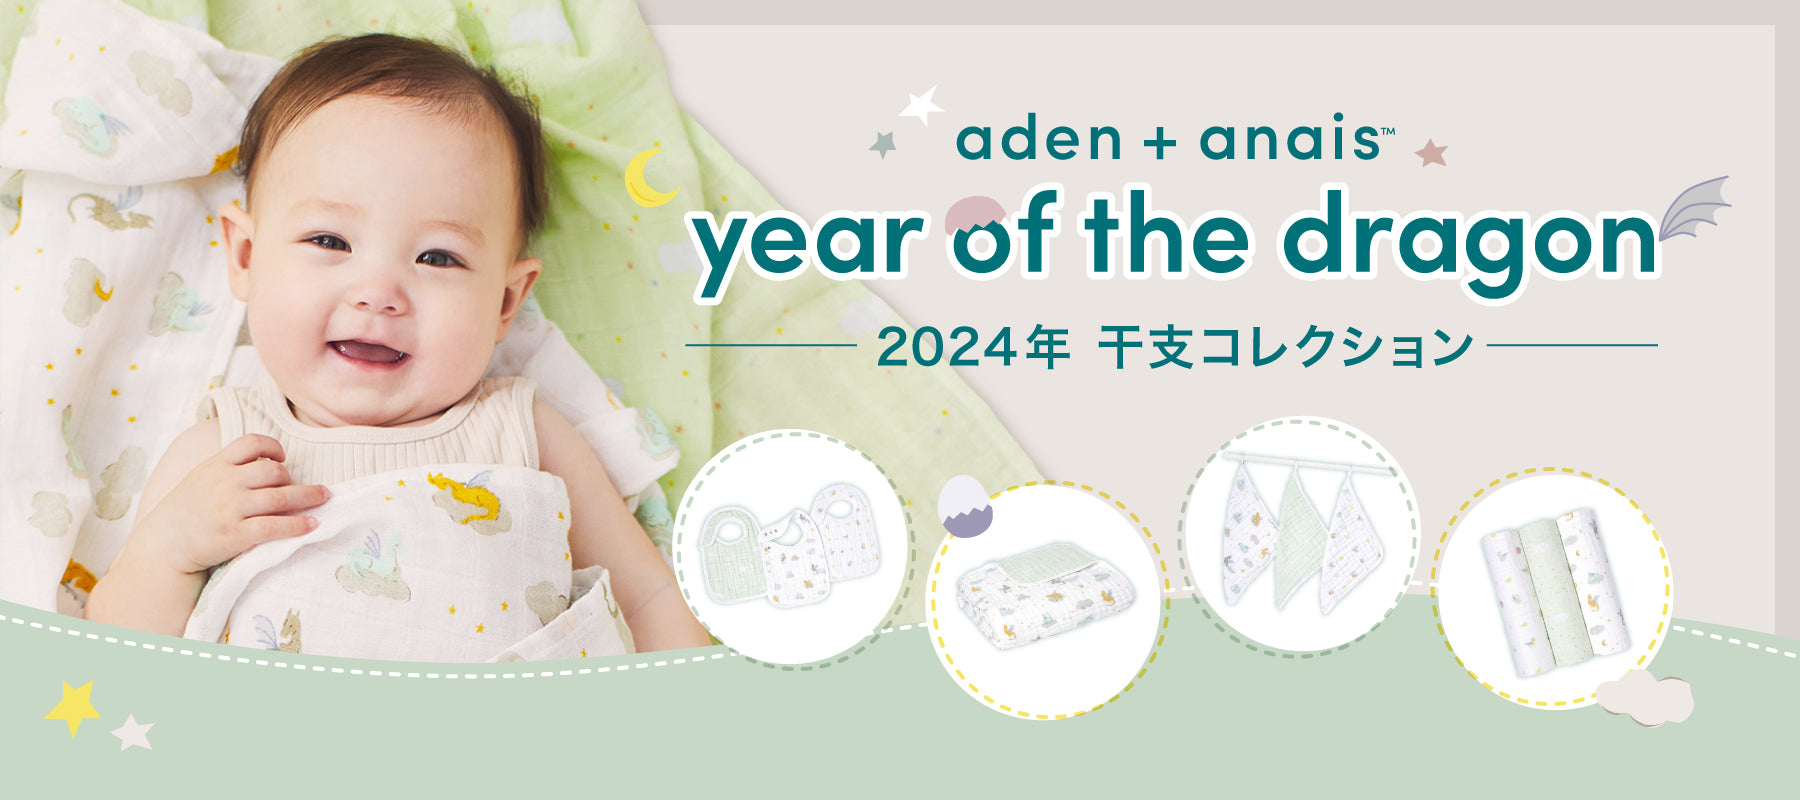 aden + anais「year of the dragon」-2024年干支コレクション-